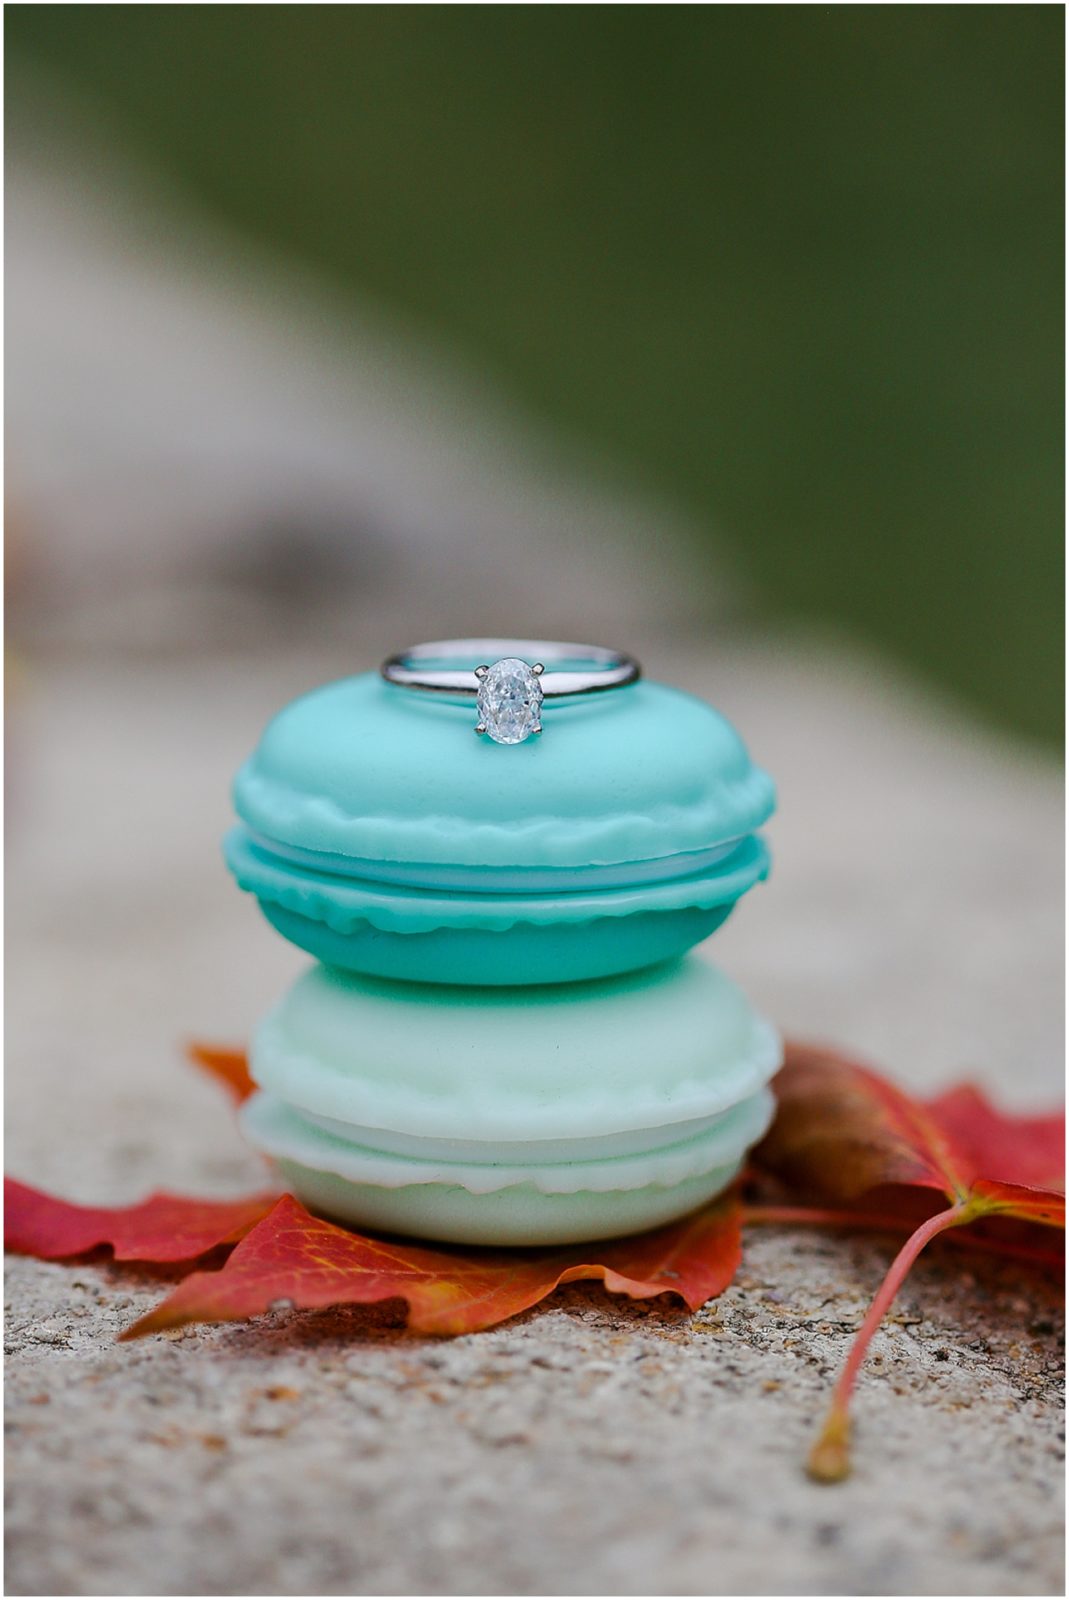 wedding ring on macaroons - engagement photos 